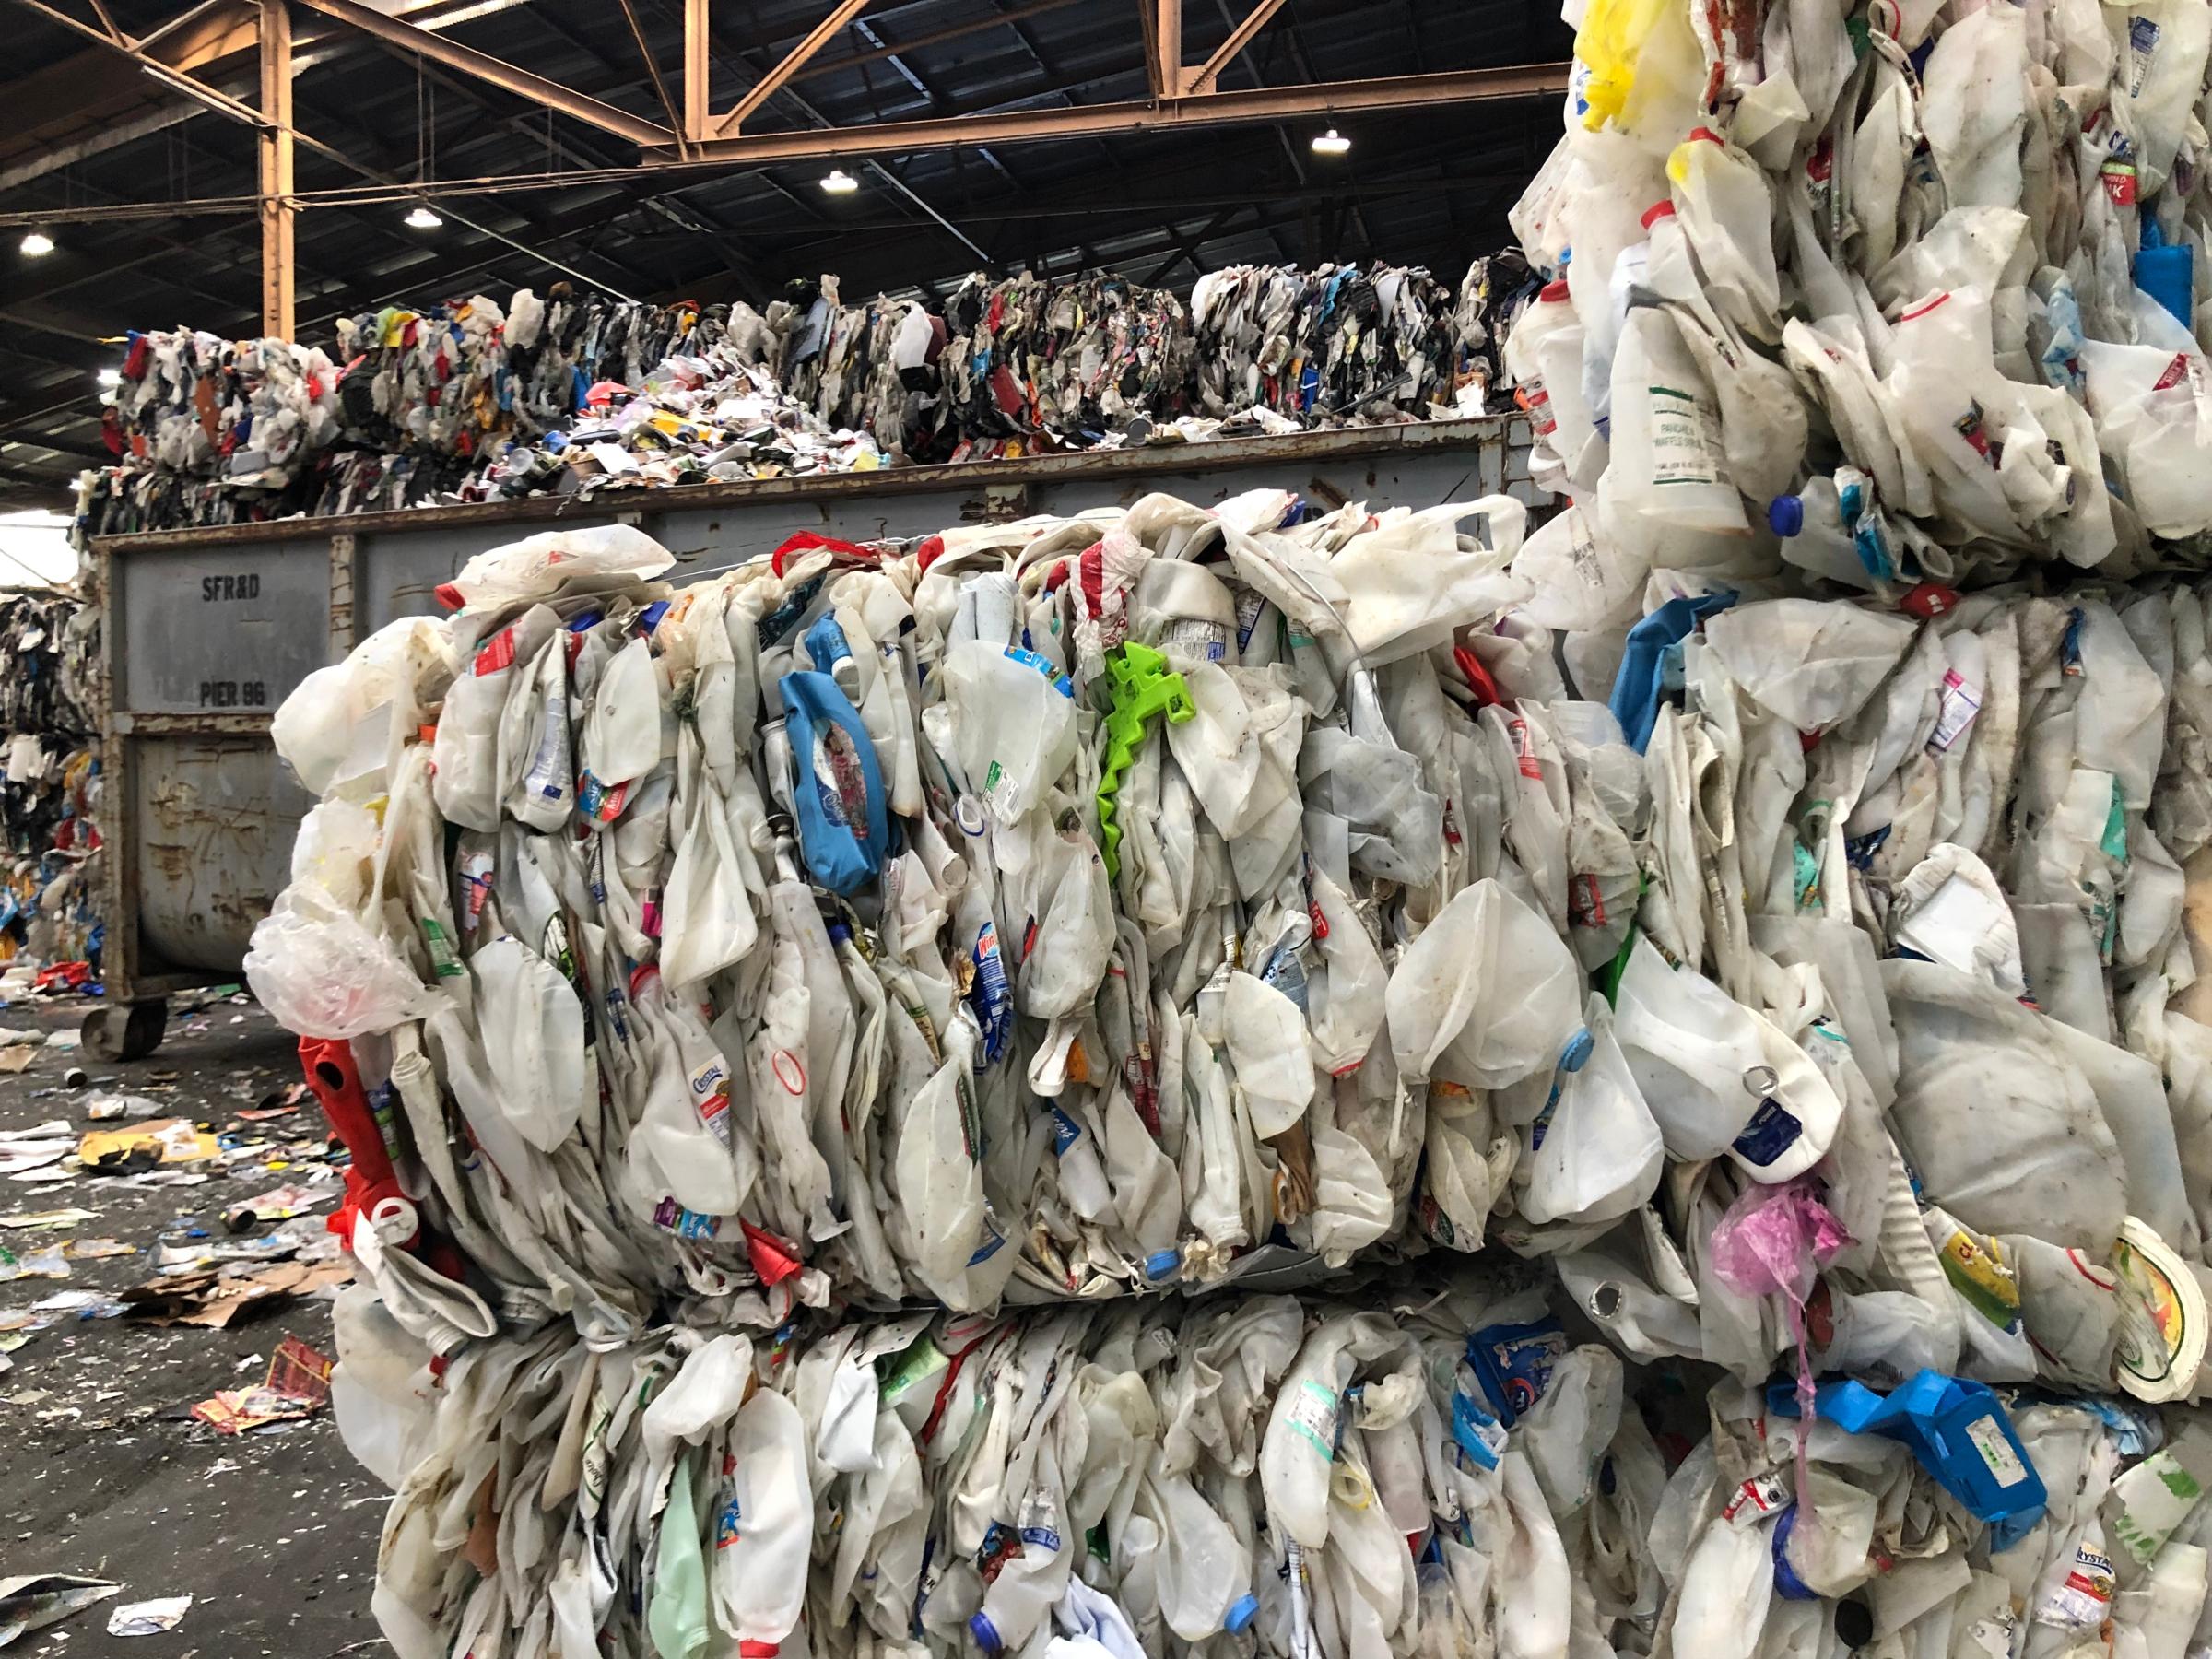 Plastics are bundled for resale in San Francisco